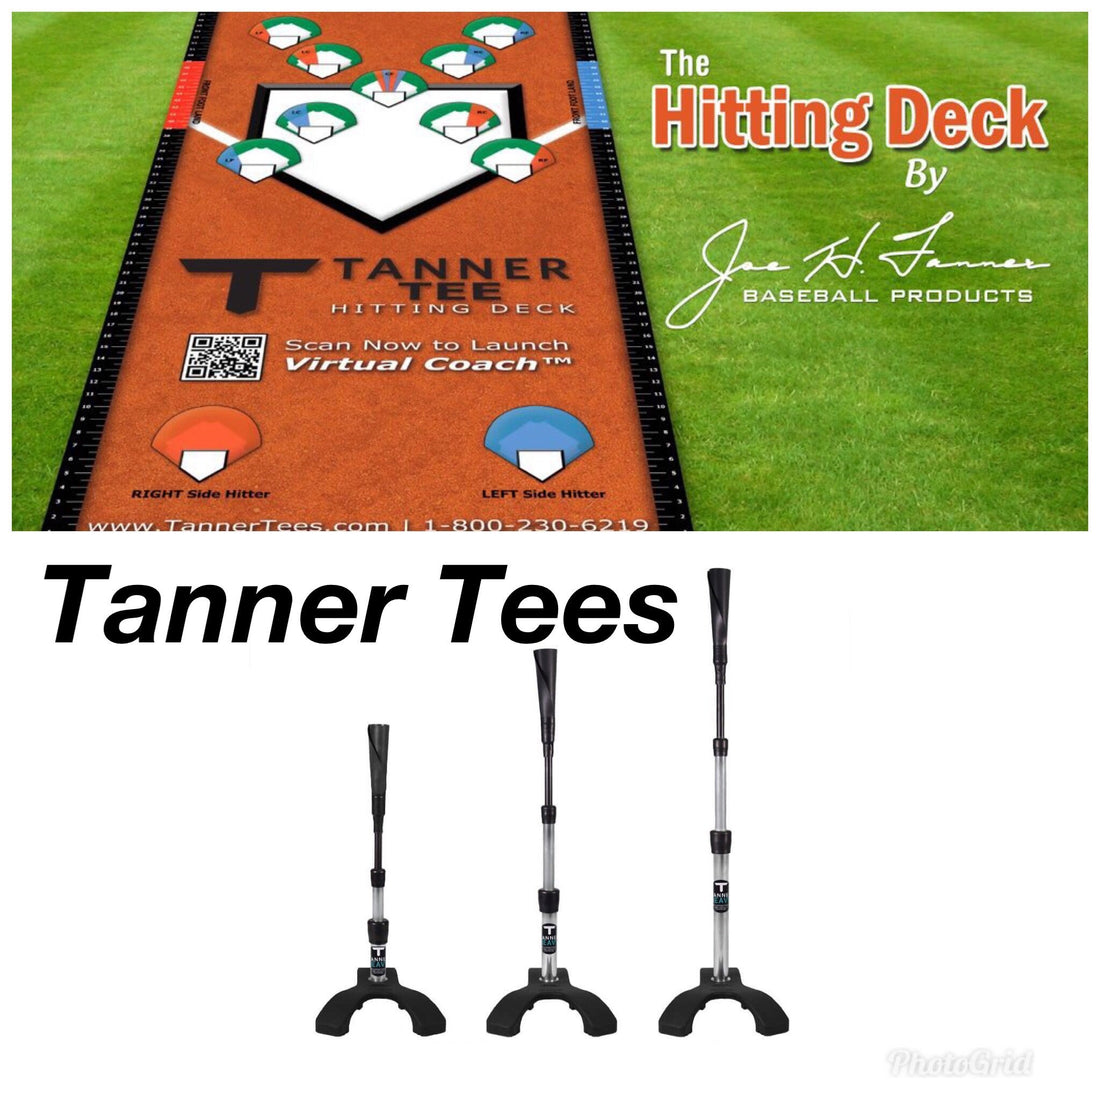 Tanner Heavy Tee & Tanner Hitting Deck Bundle - Maximum Velocity Sports